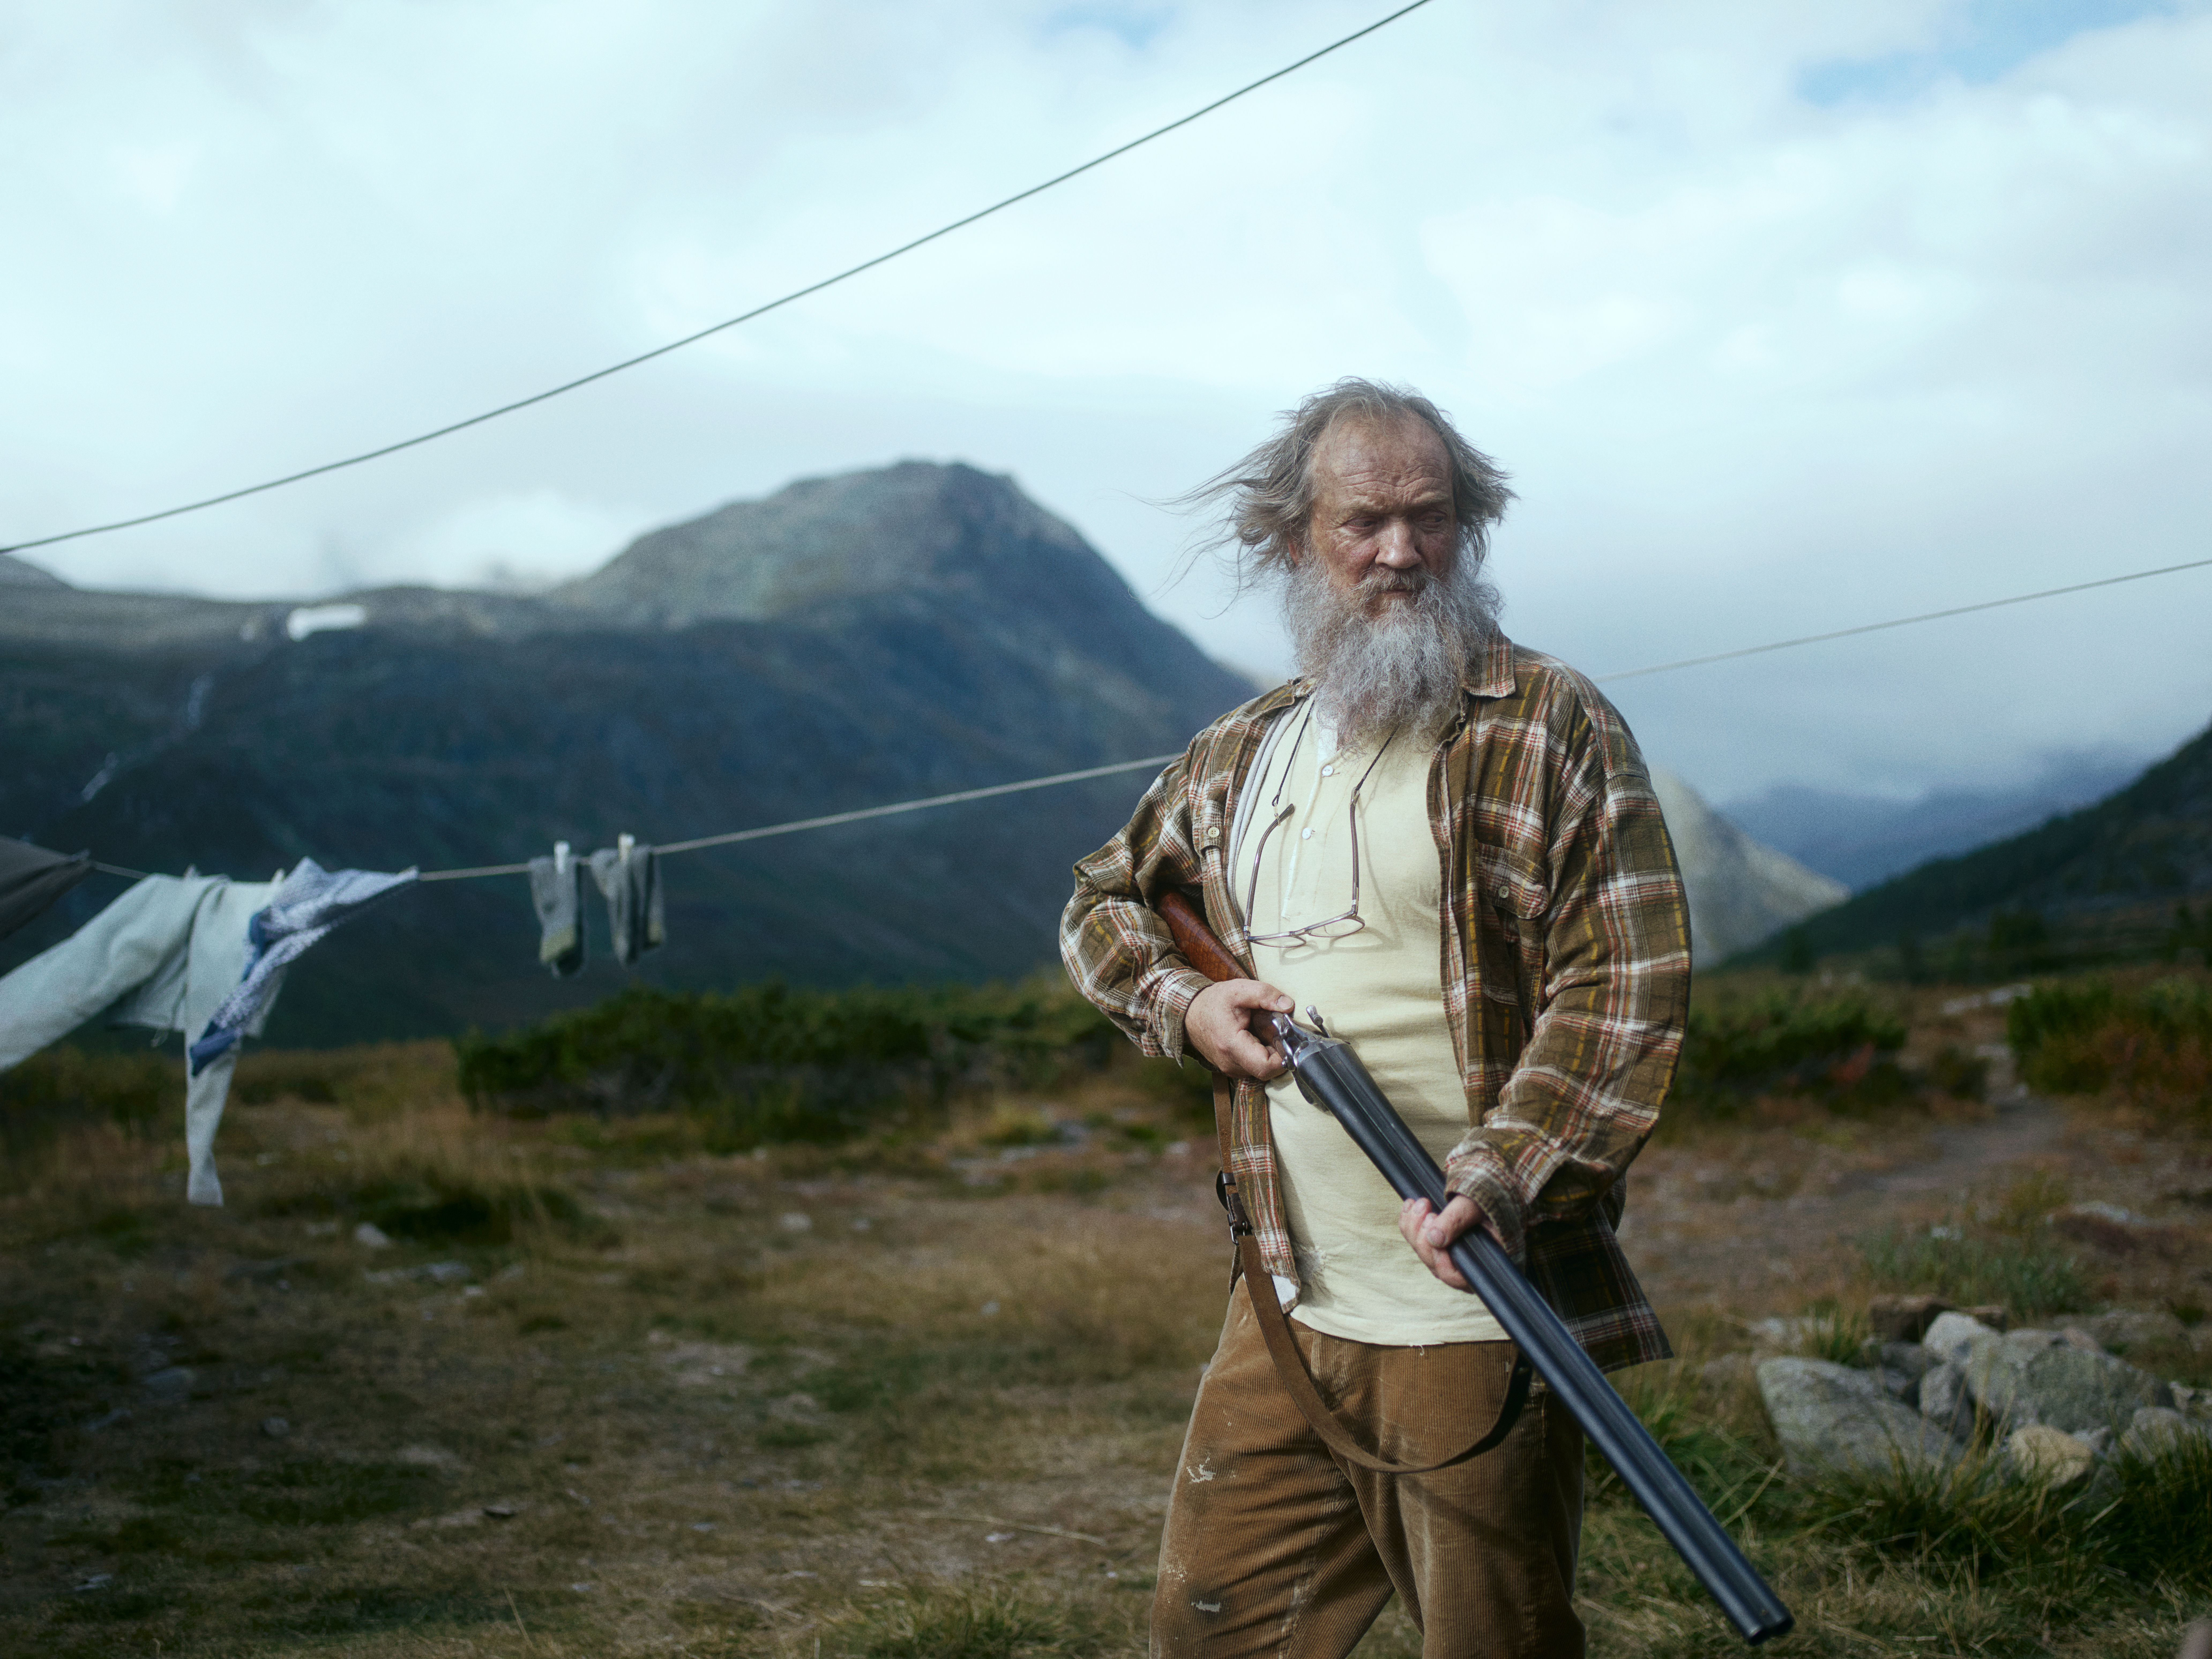 Gard B. Eidsvold as Tobias in ‘Troll’. Image: Fransisco Munoz / courtesy of Netflix